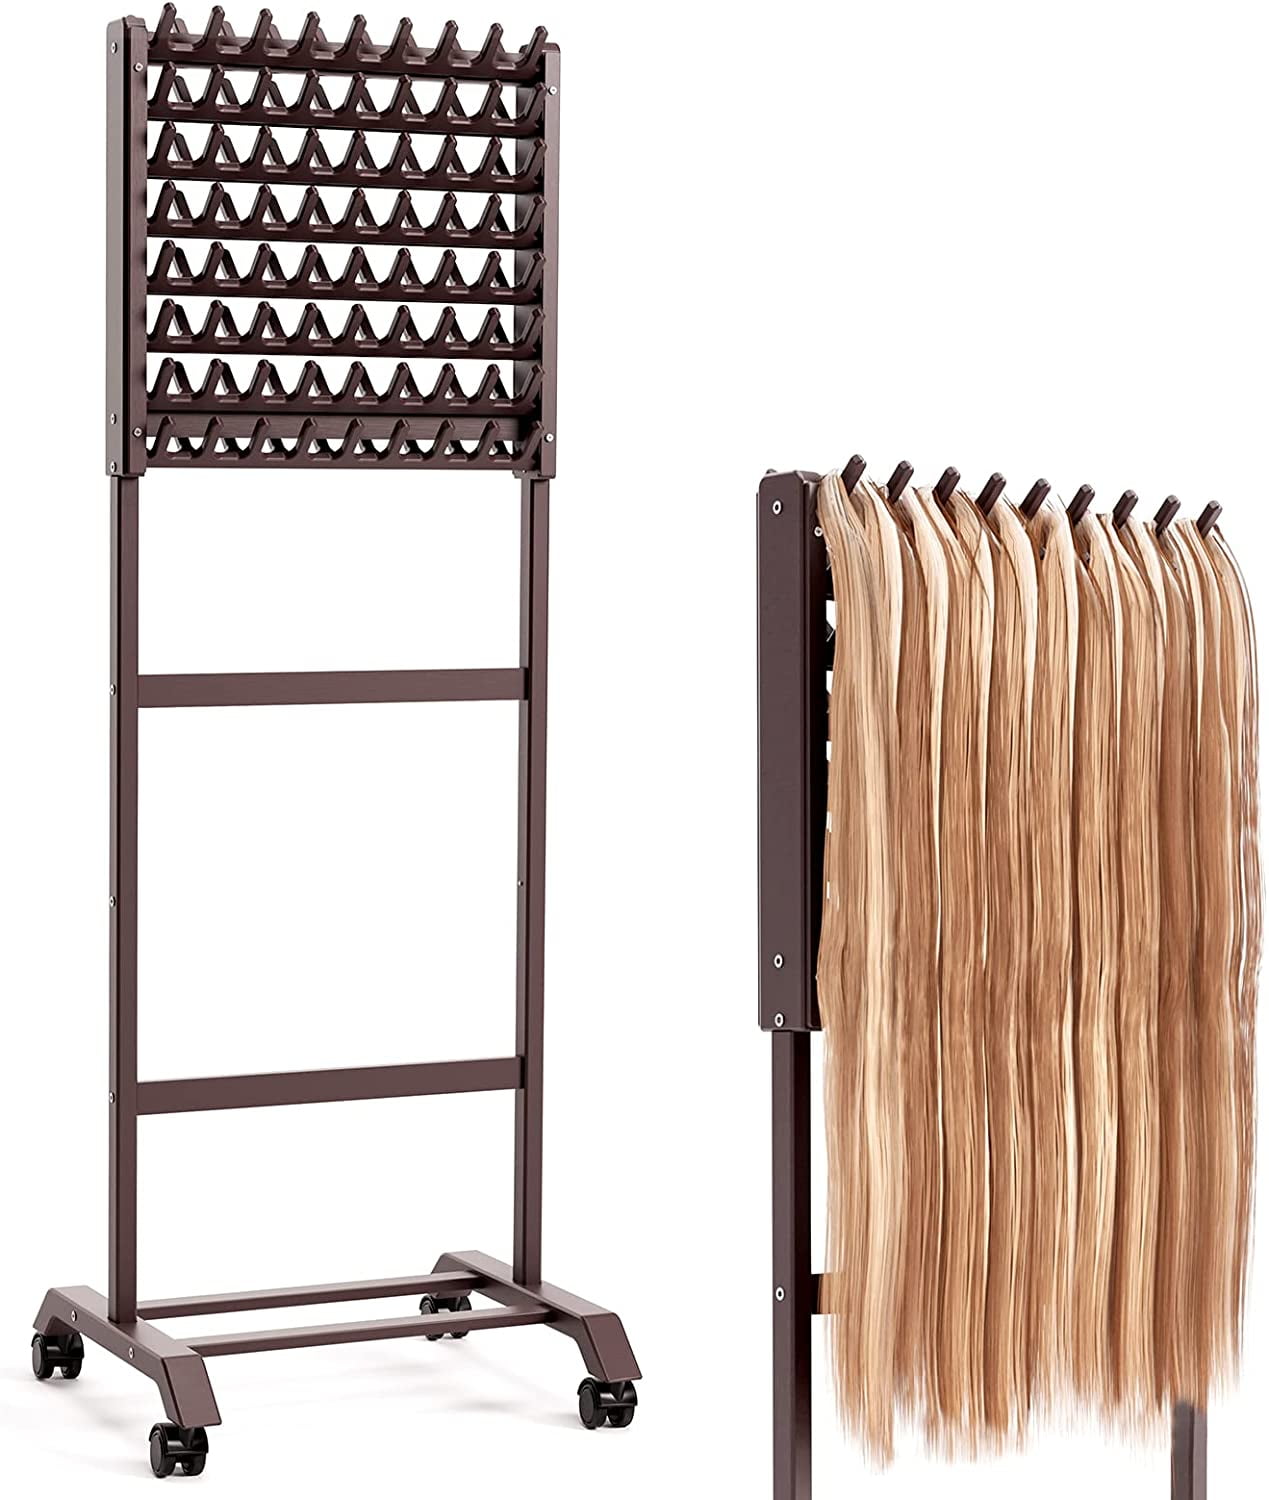 Braiding Hair Rack with Sawtooth Pegs, 144 Pegs Wooden Hair Holder